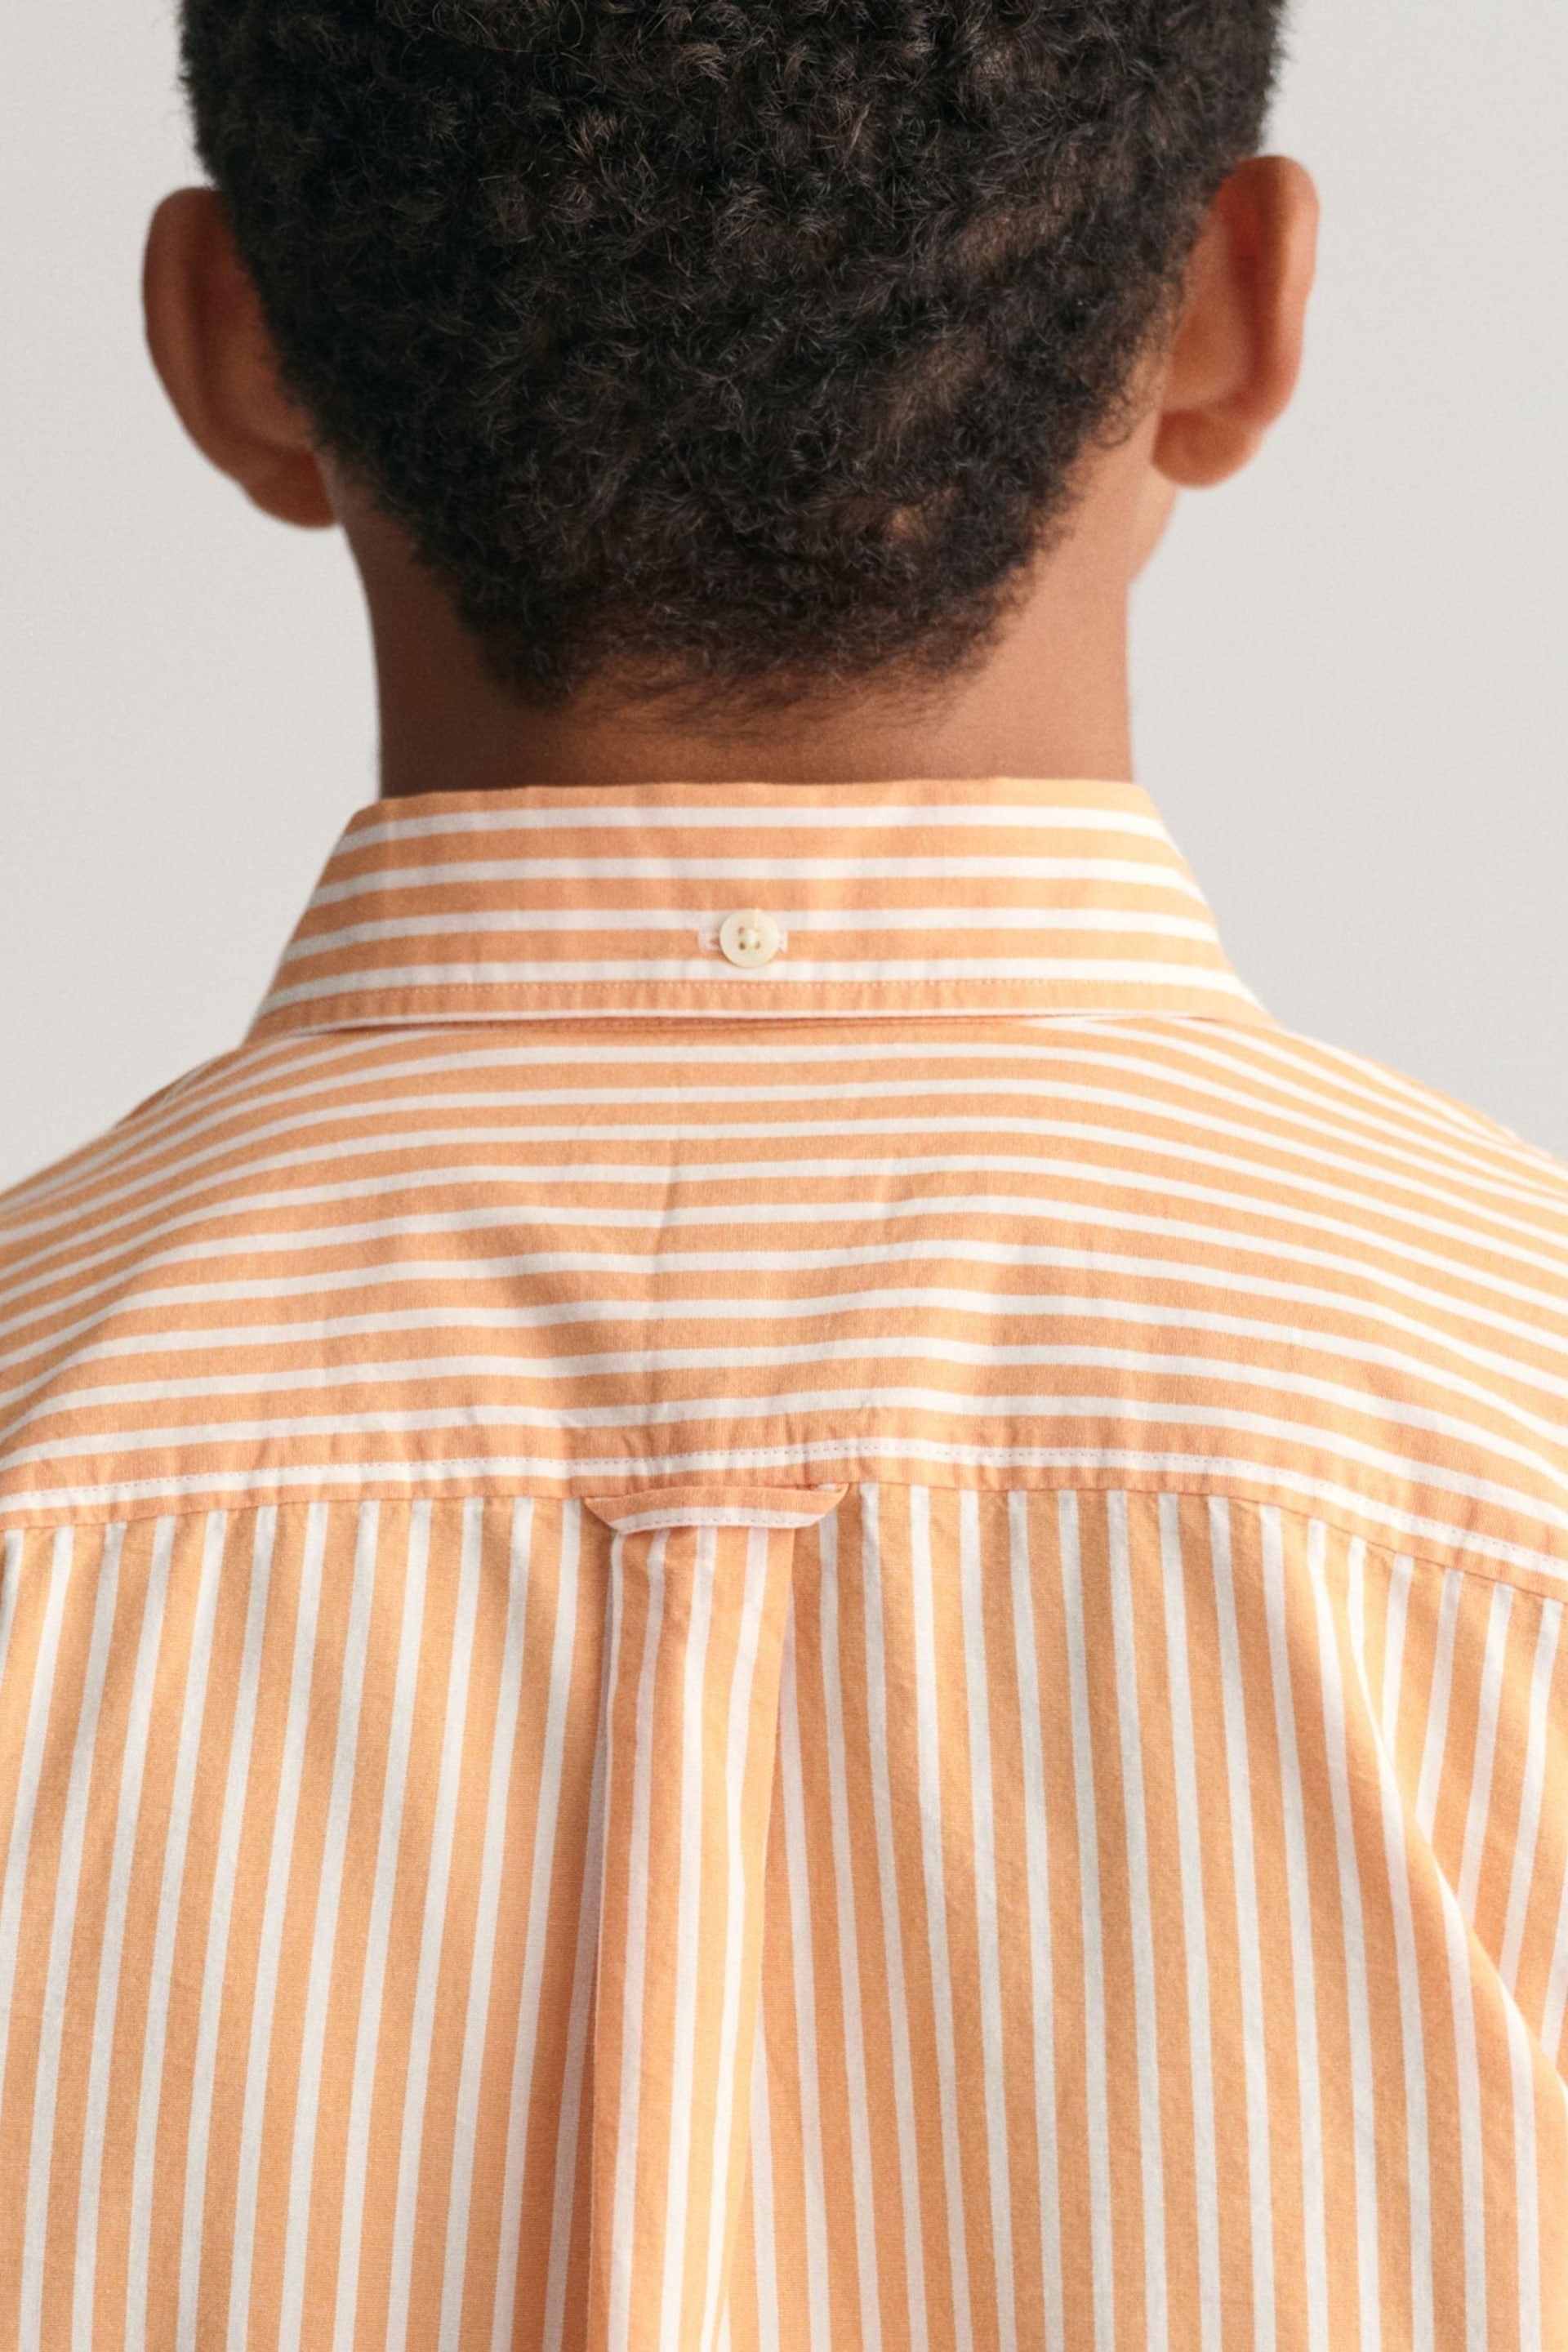 GANT Teens Shield Striped Poplin Shirt - Image 5 of 7